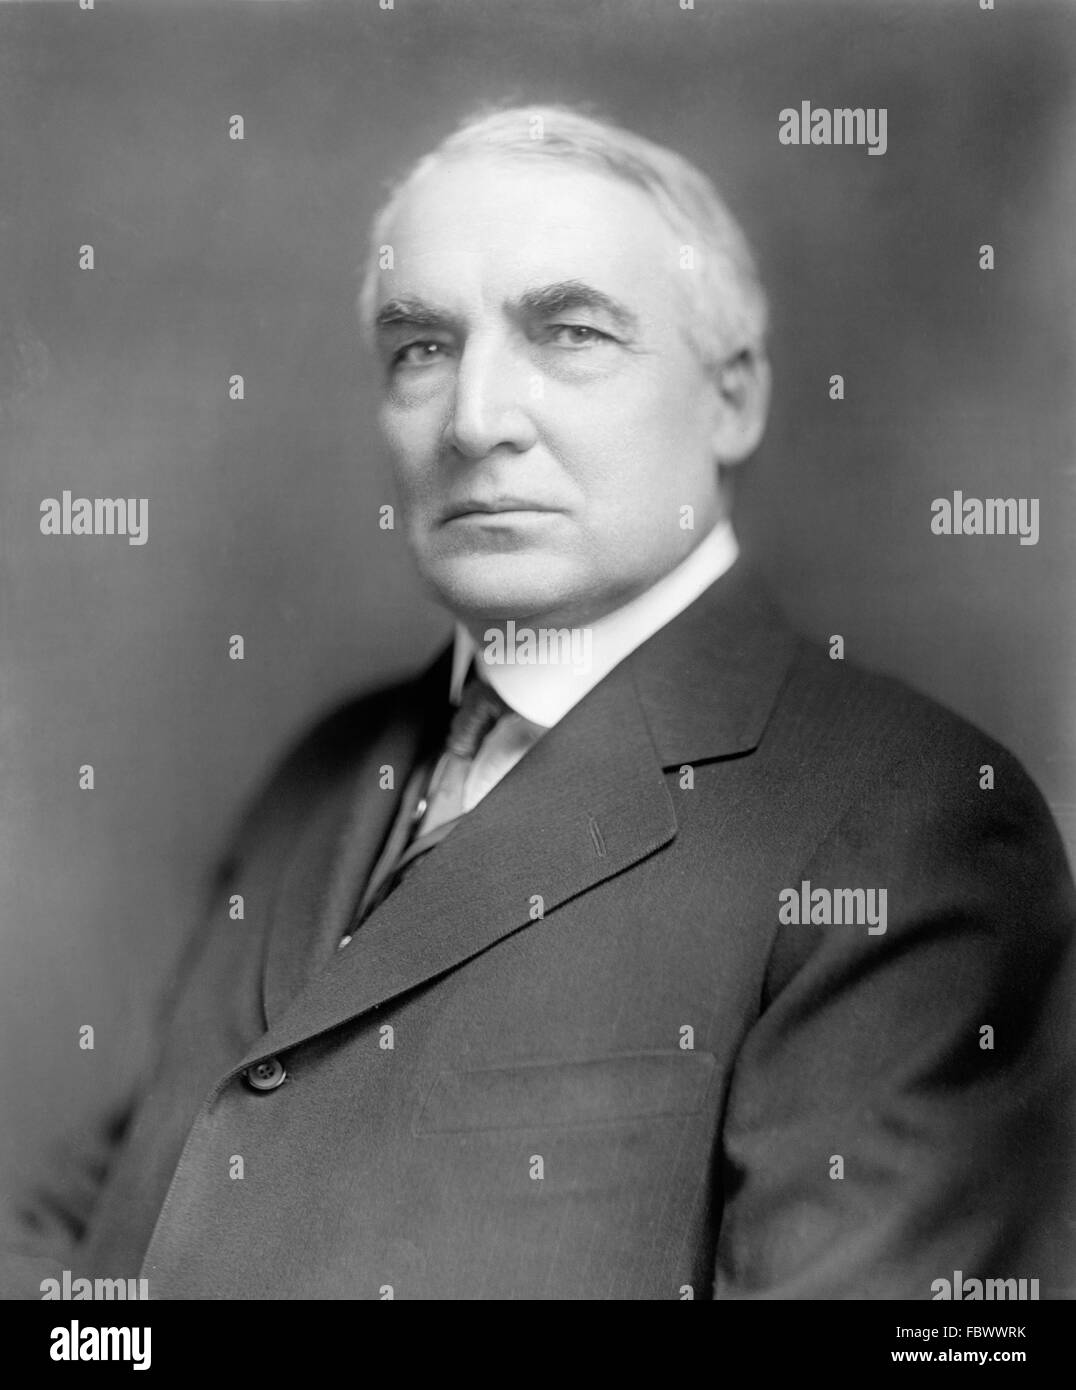 Warren Harding. Portrait of Warren G Harding, the 29th President of the USA, c,1920 Stock Photo